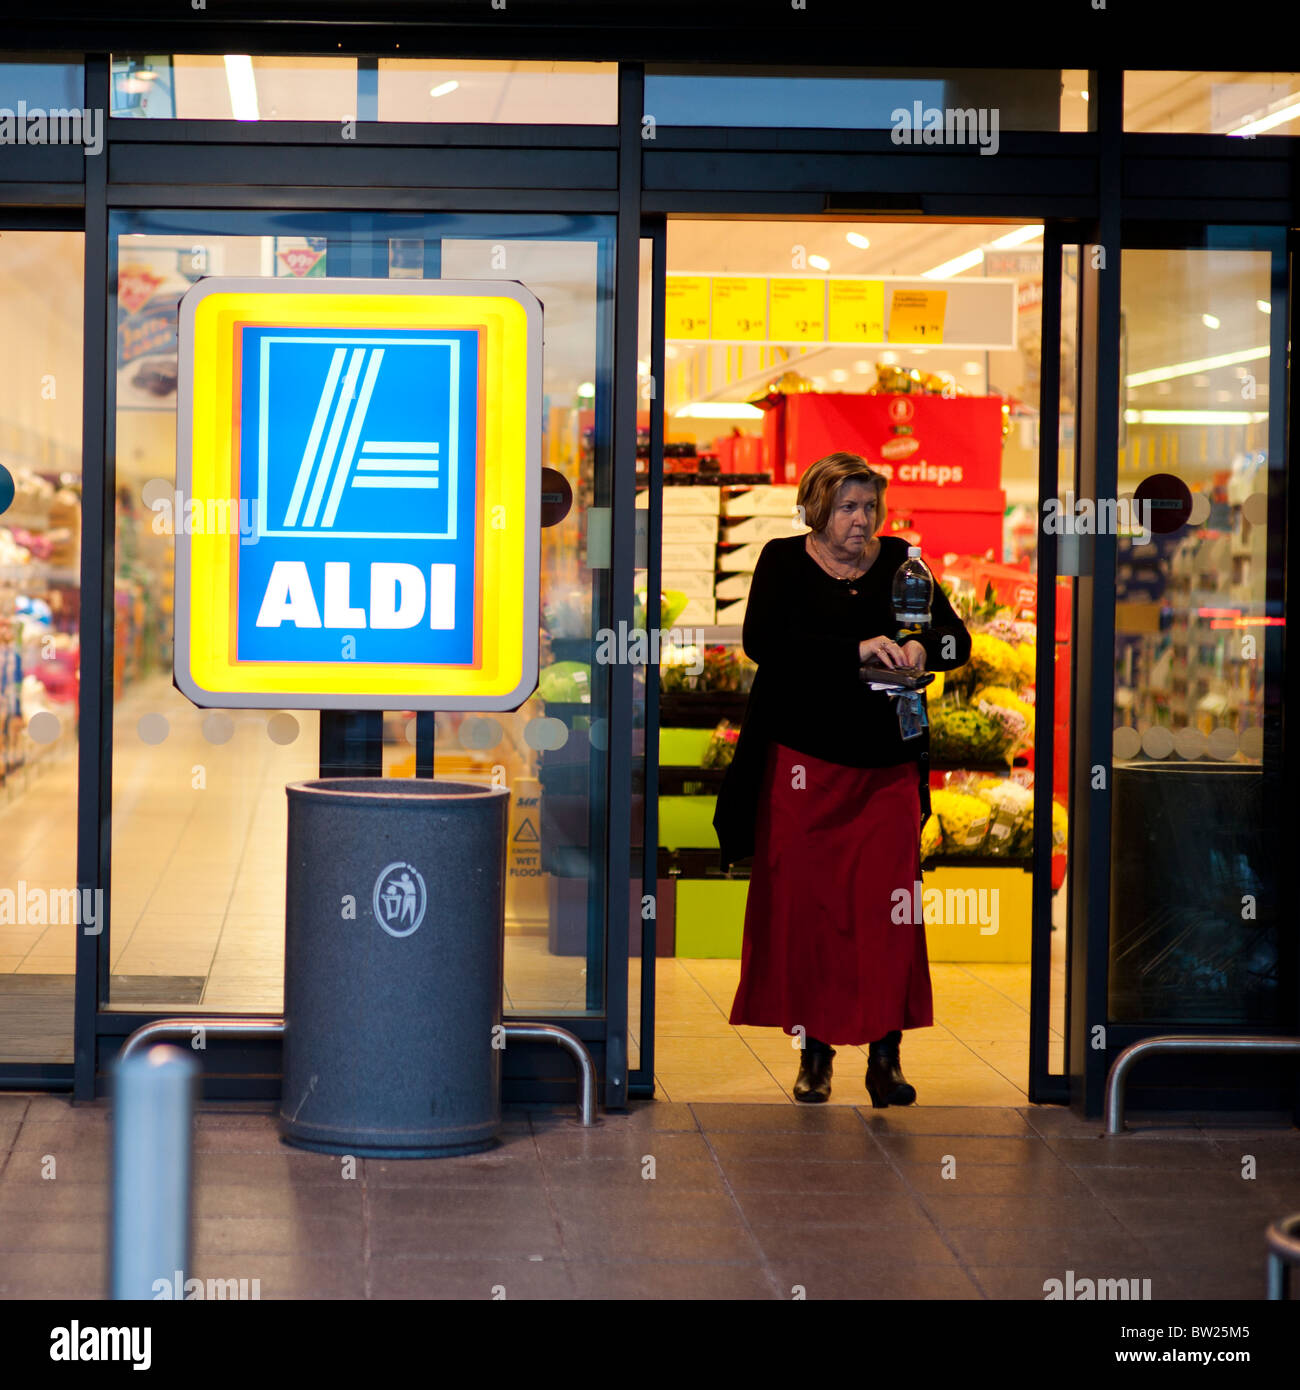 Aldi discount supermarket UK Stock Photo